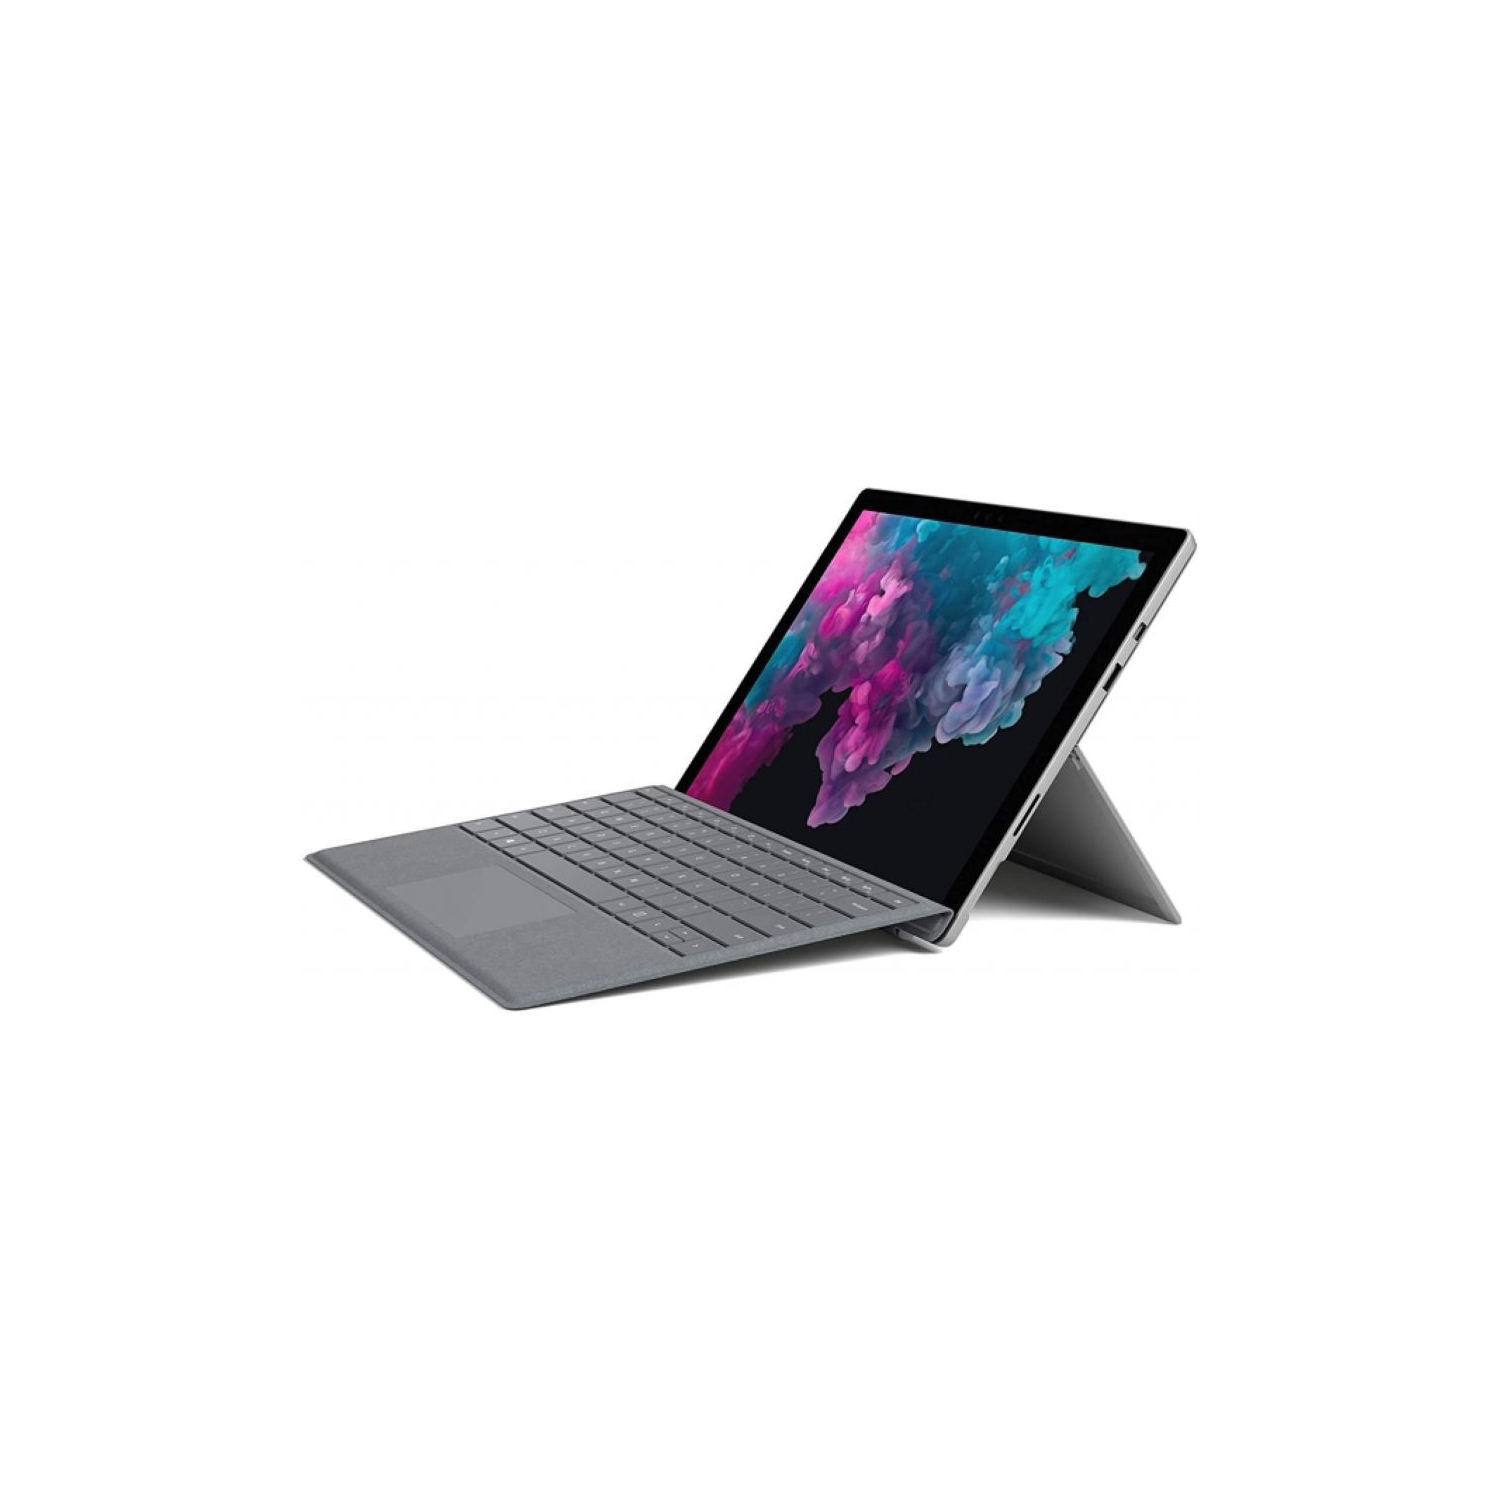 Refurbished Good - Microsoft Surface PRO 5 (1796) Tablet - 12.3" Touchscreen, Intel Core i7-7660U, 2.5GHz, 8GB, 256GB SSD, Windows 10 Pro - 2K Resolution 2736x1824 - With Keyboard